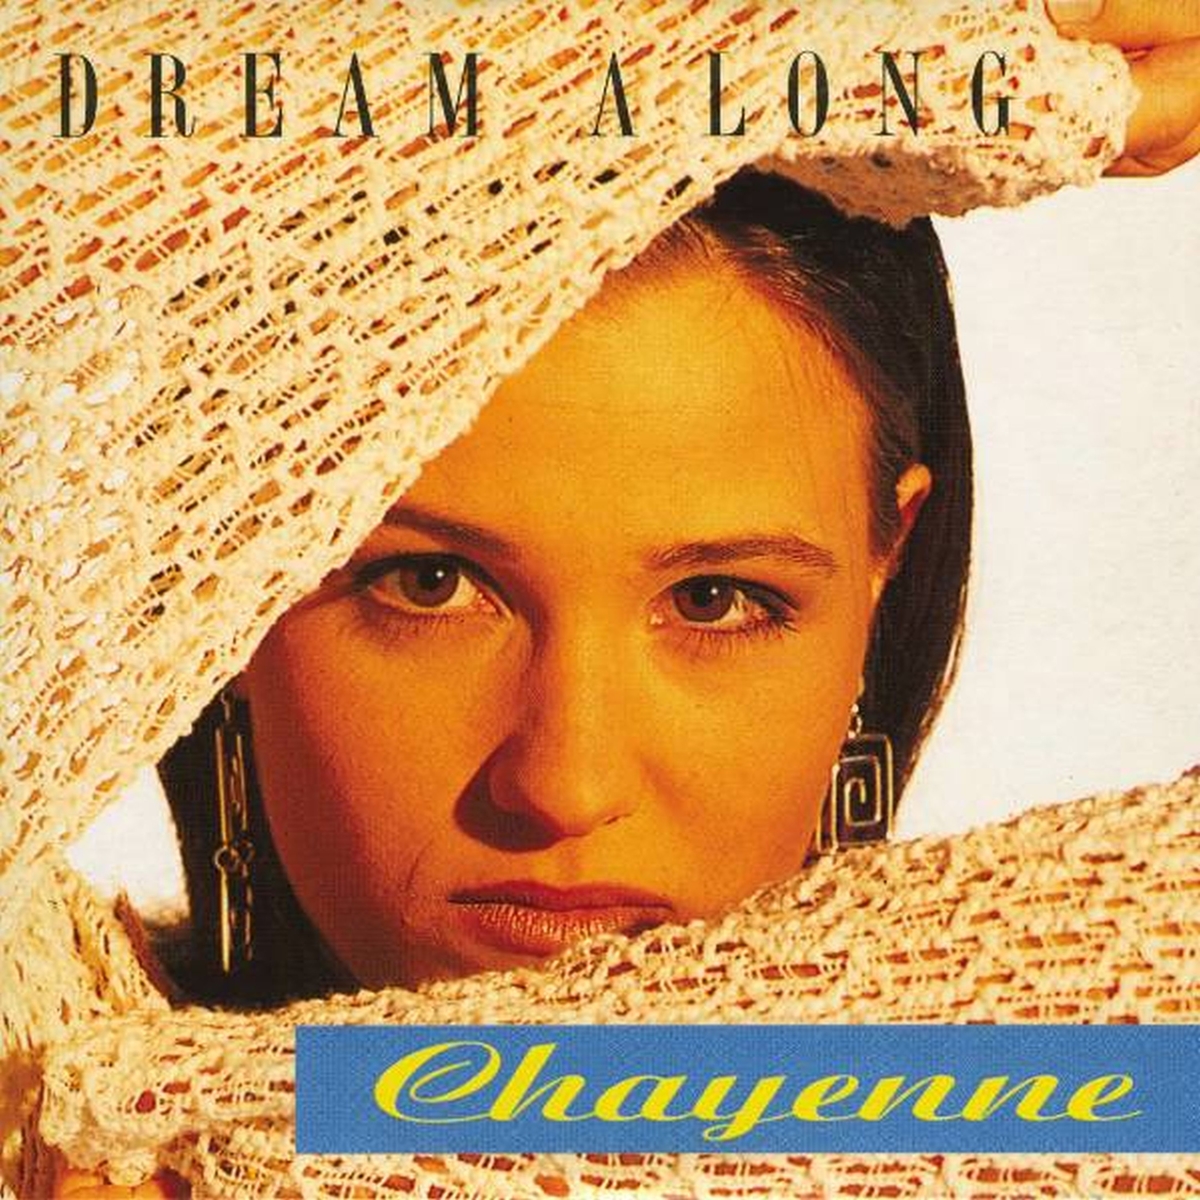 Chayenne - Dream Along (CD Single) (1995)